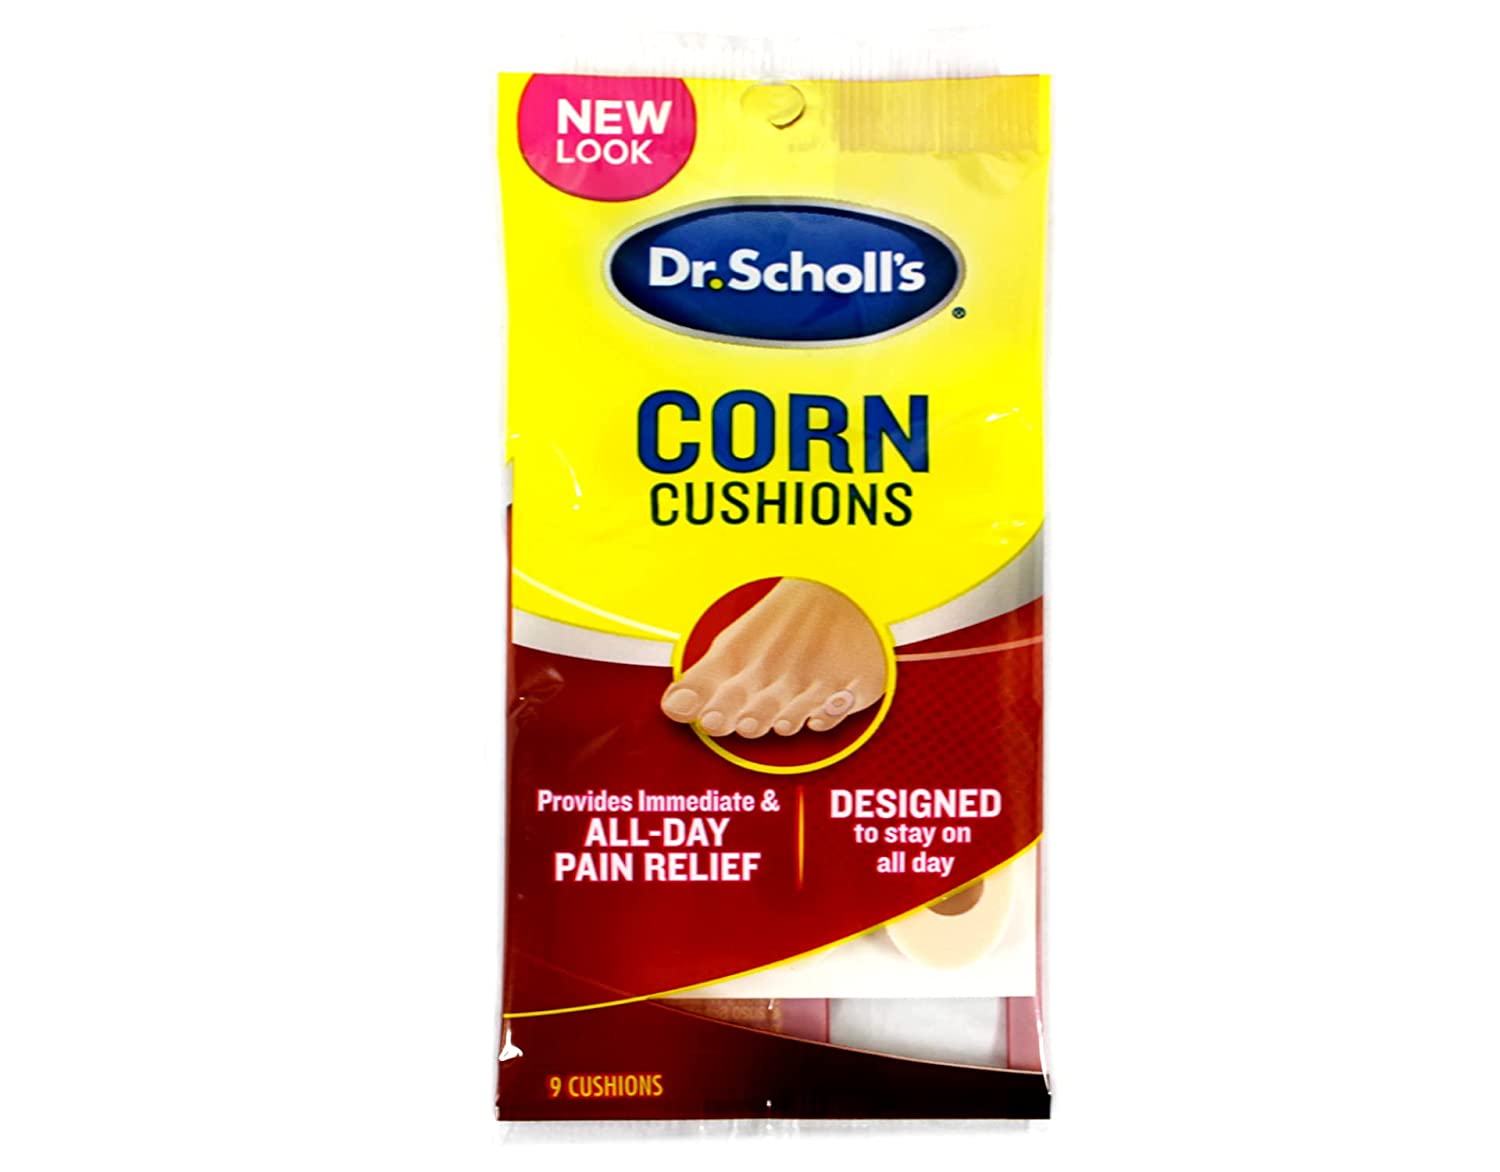 Dr. Scholl's Corn Cushions Regular 9 count